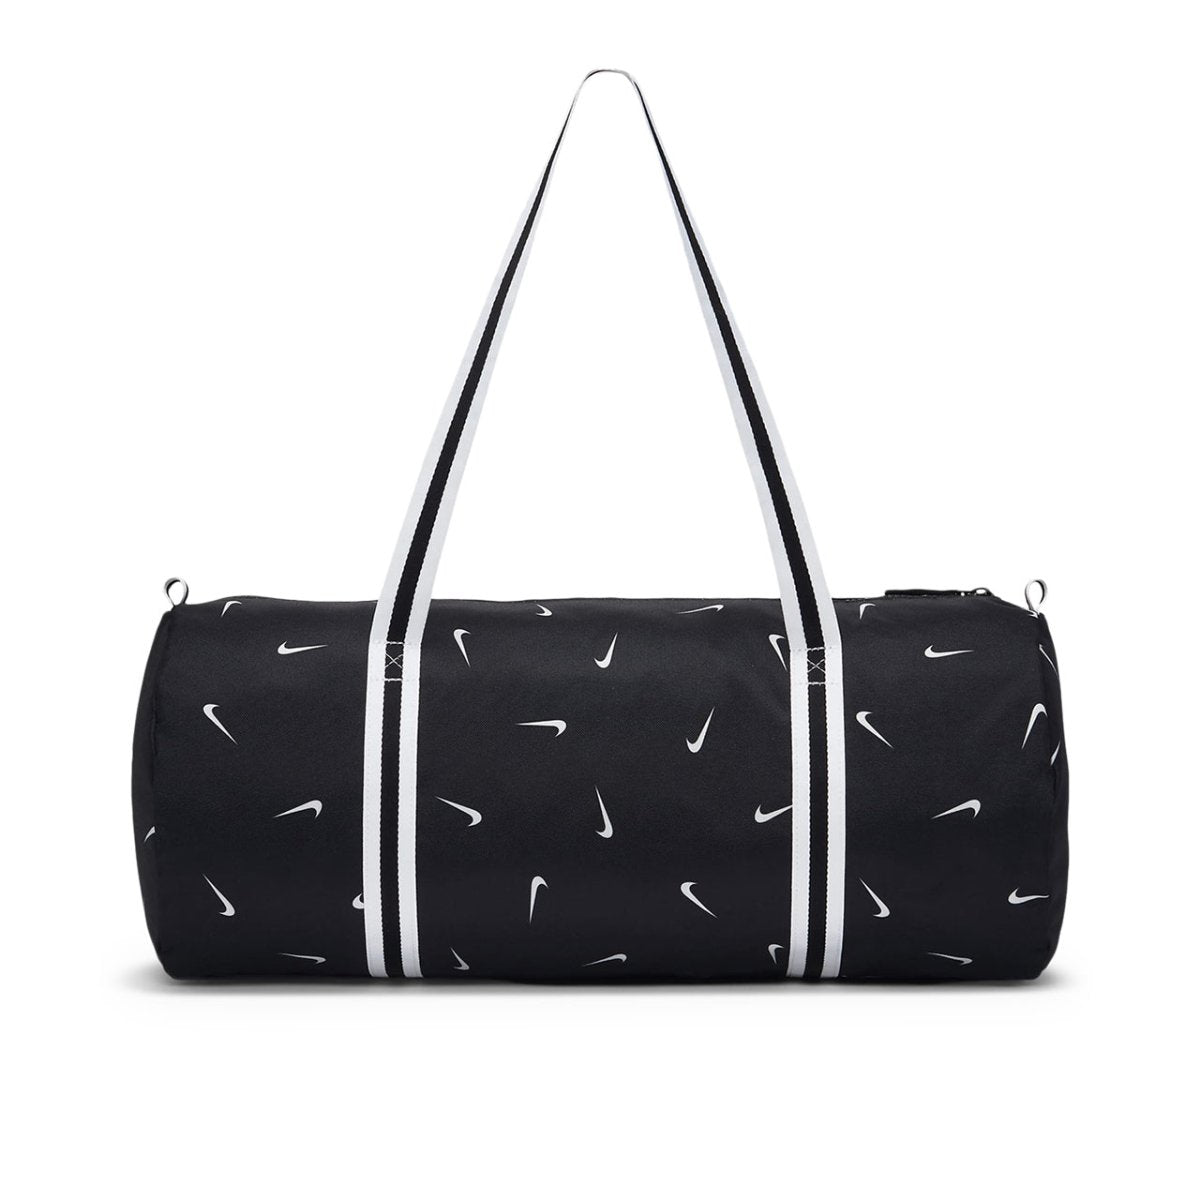 Nike Heritage Duffle Bag (Schwarz / Weiß)  - Allike Store